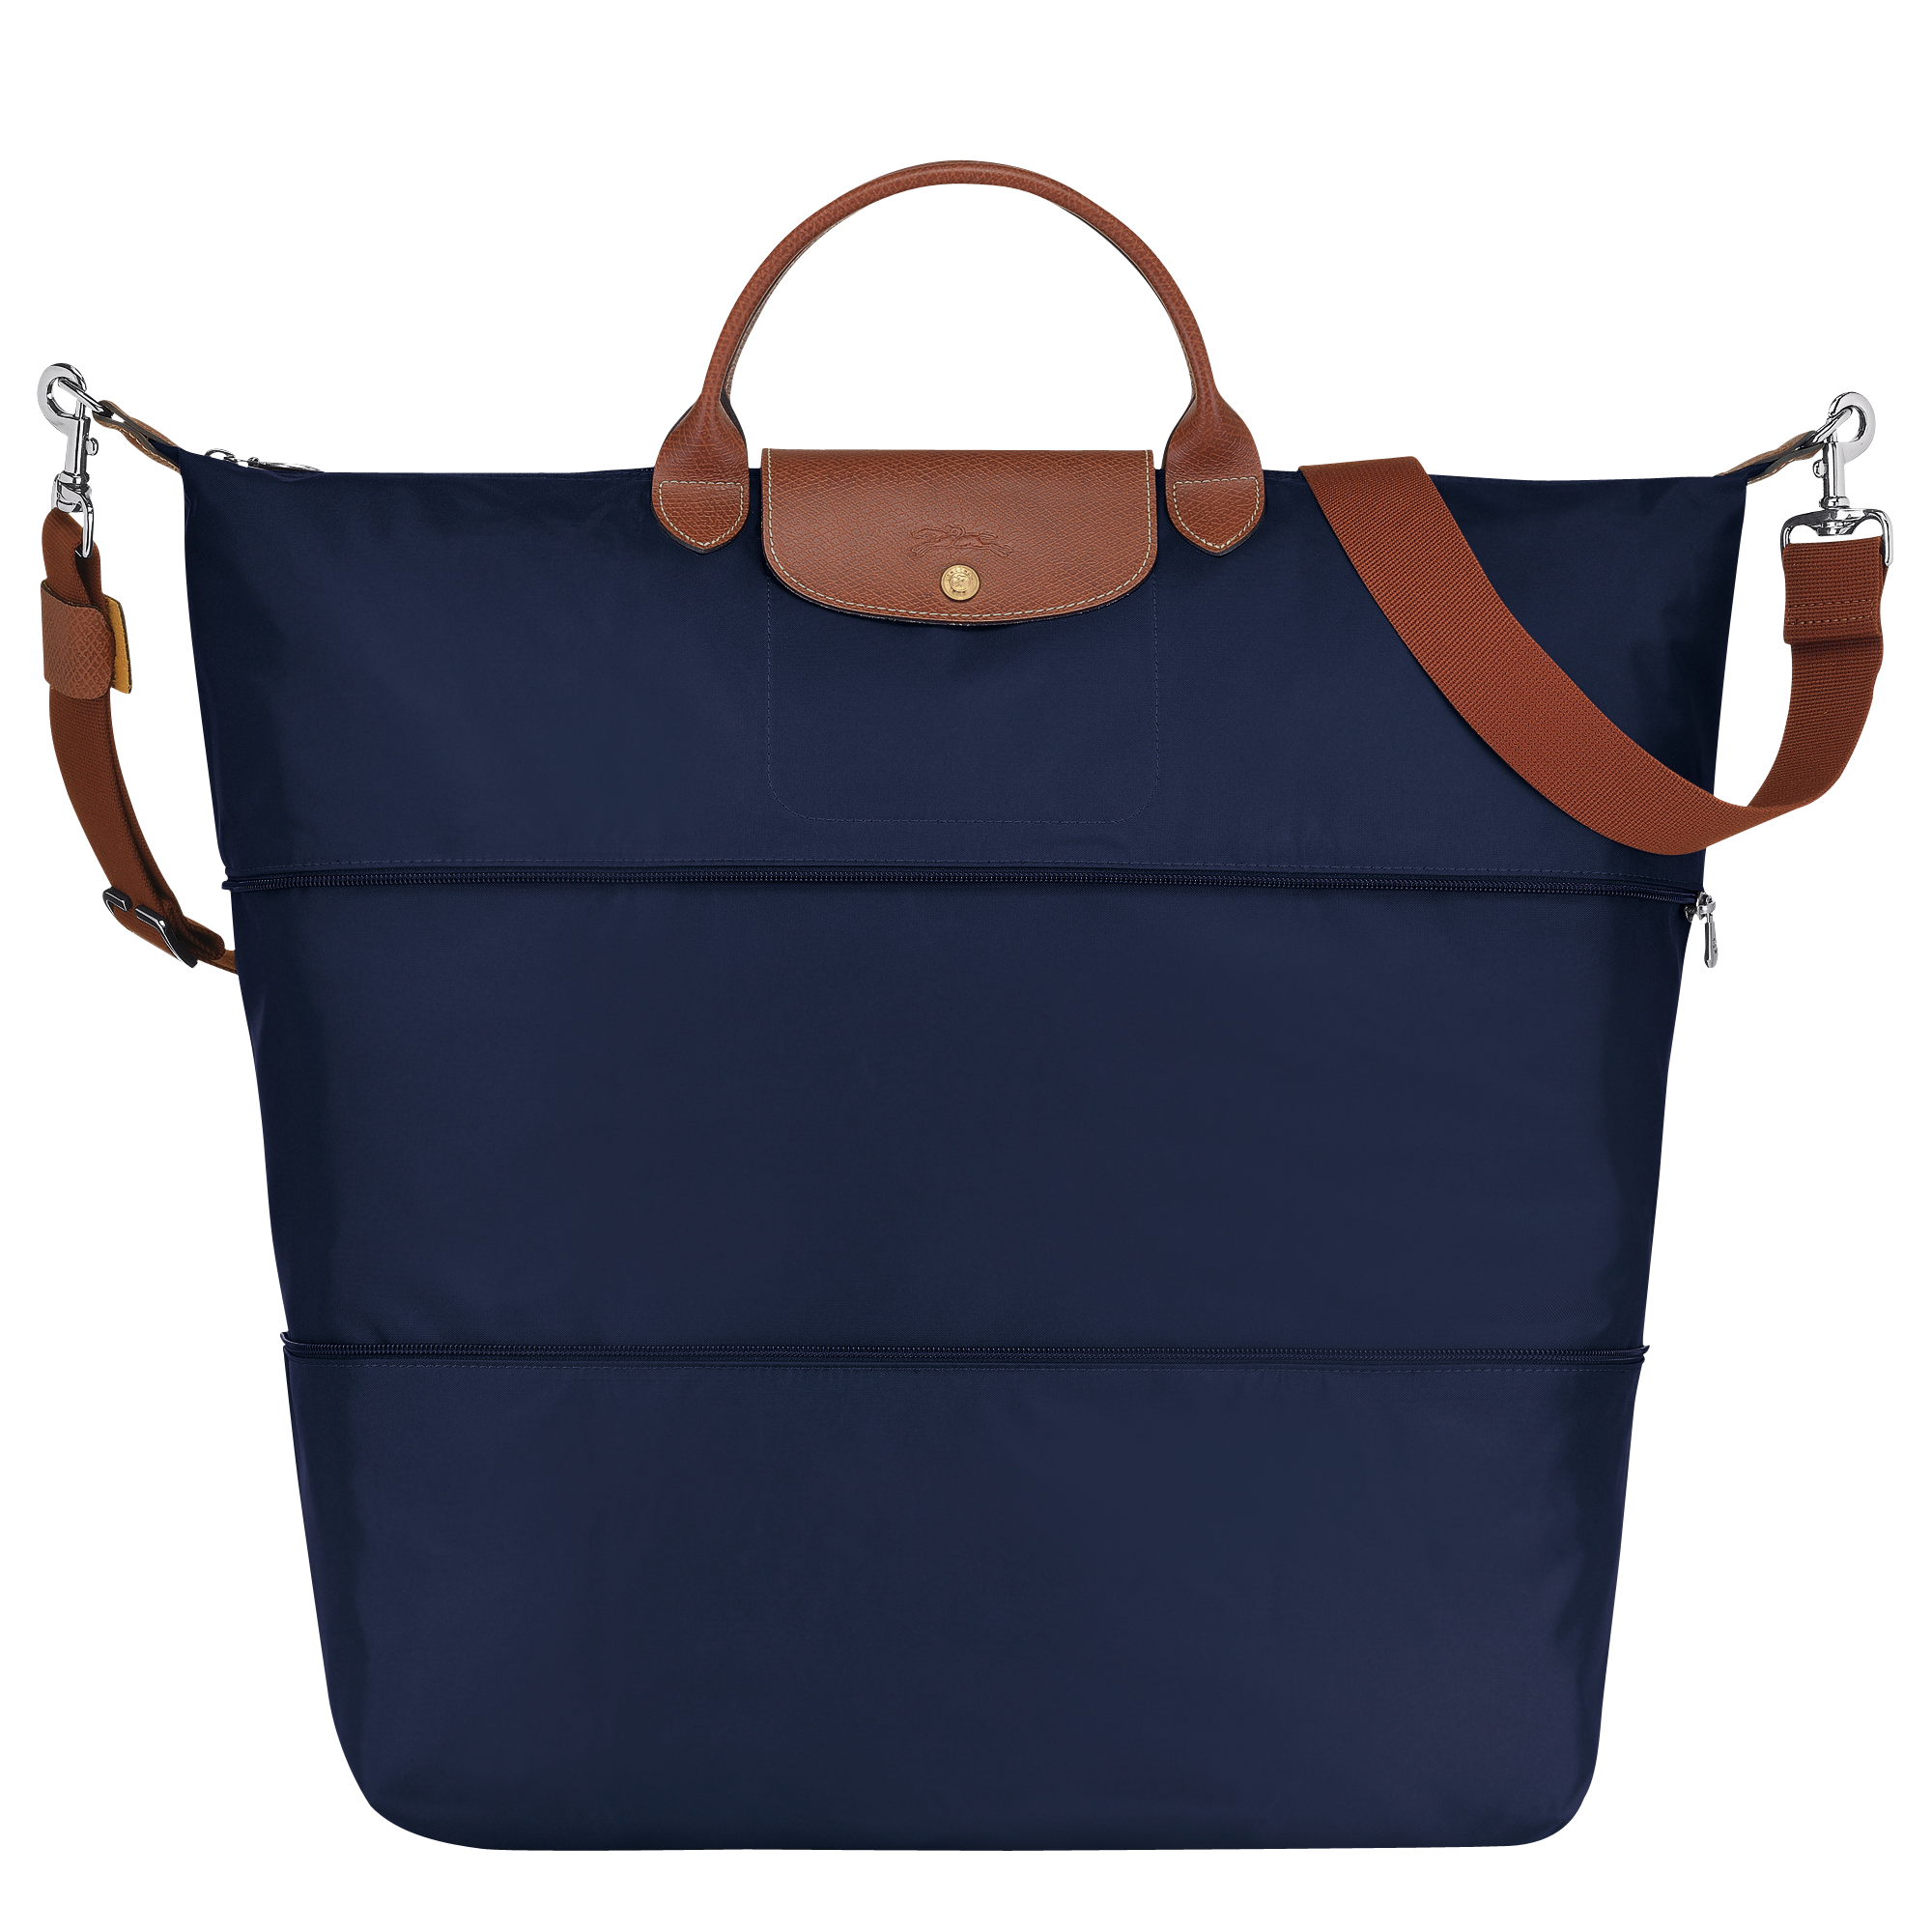 expandable longchamp bag